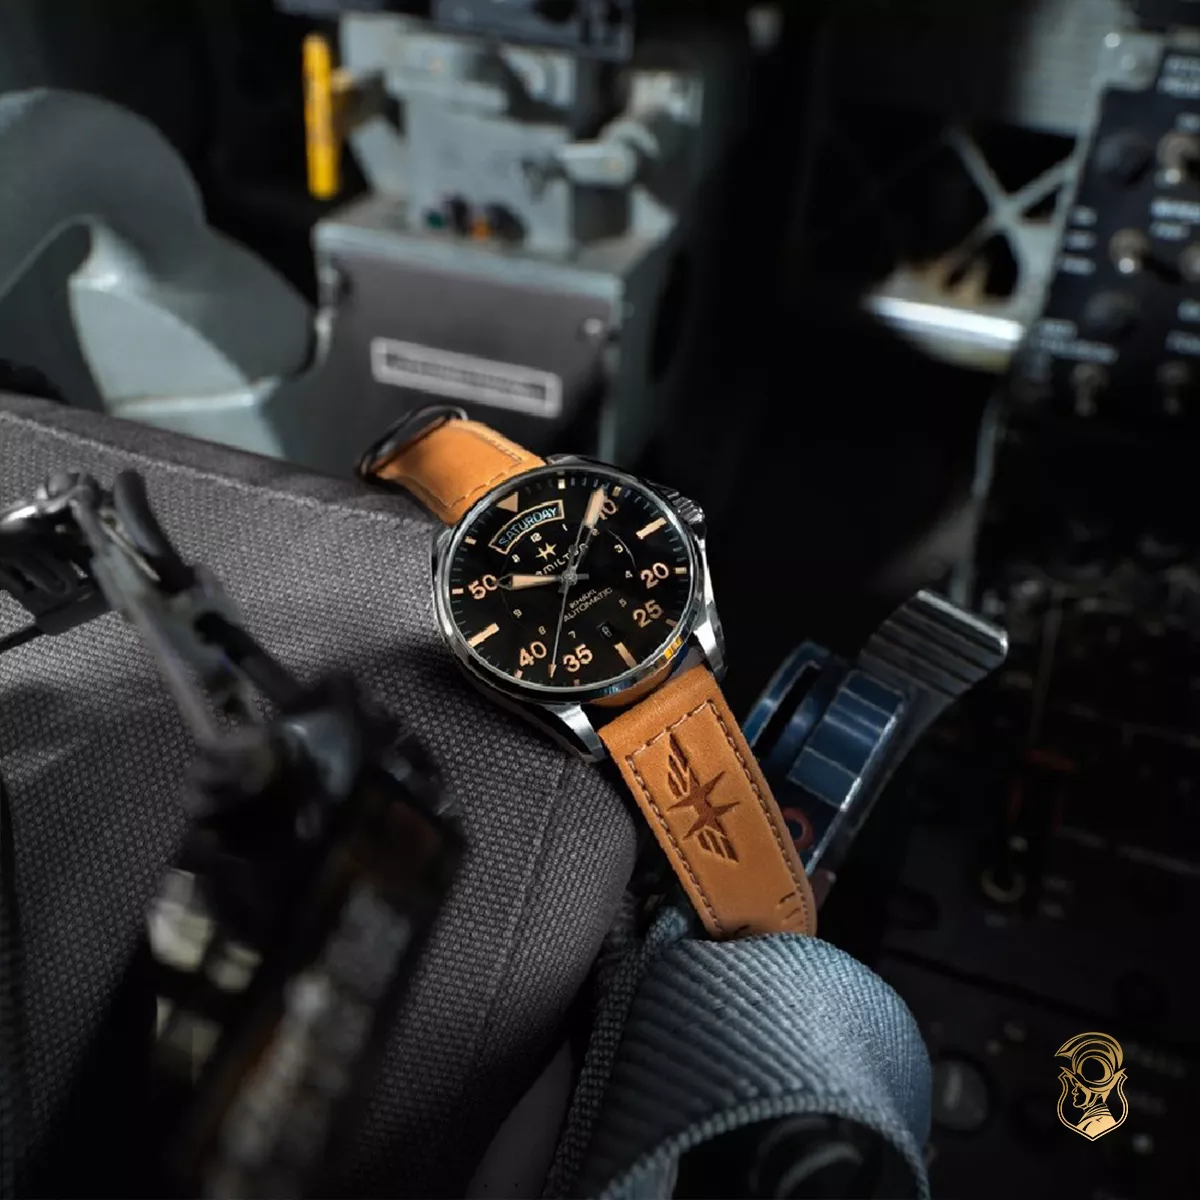 Hamilton Khaki Pilot Chronograph Watch 44mm